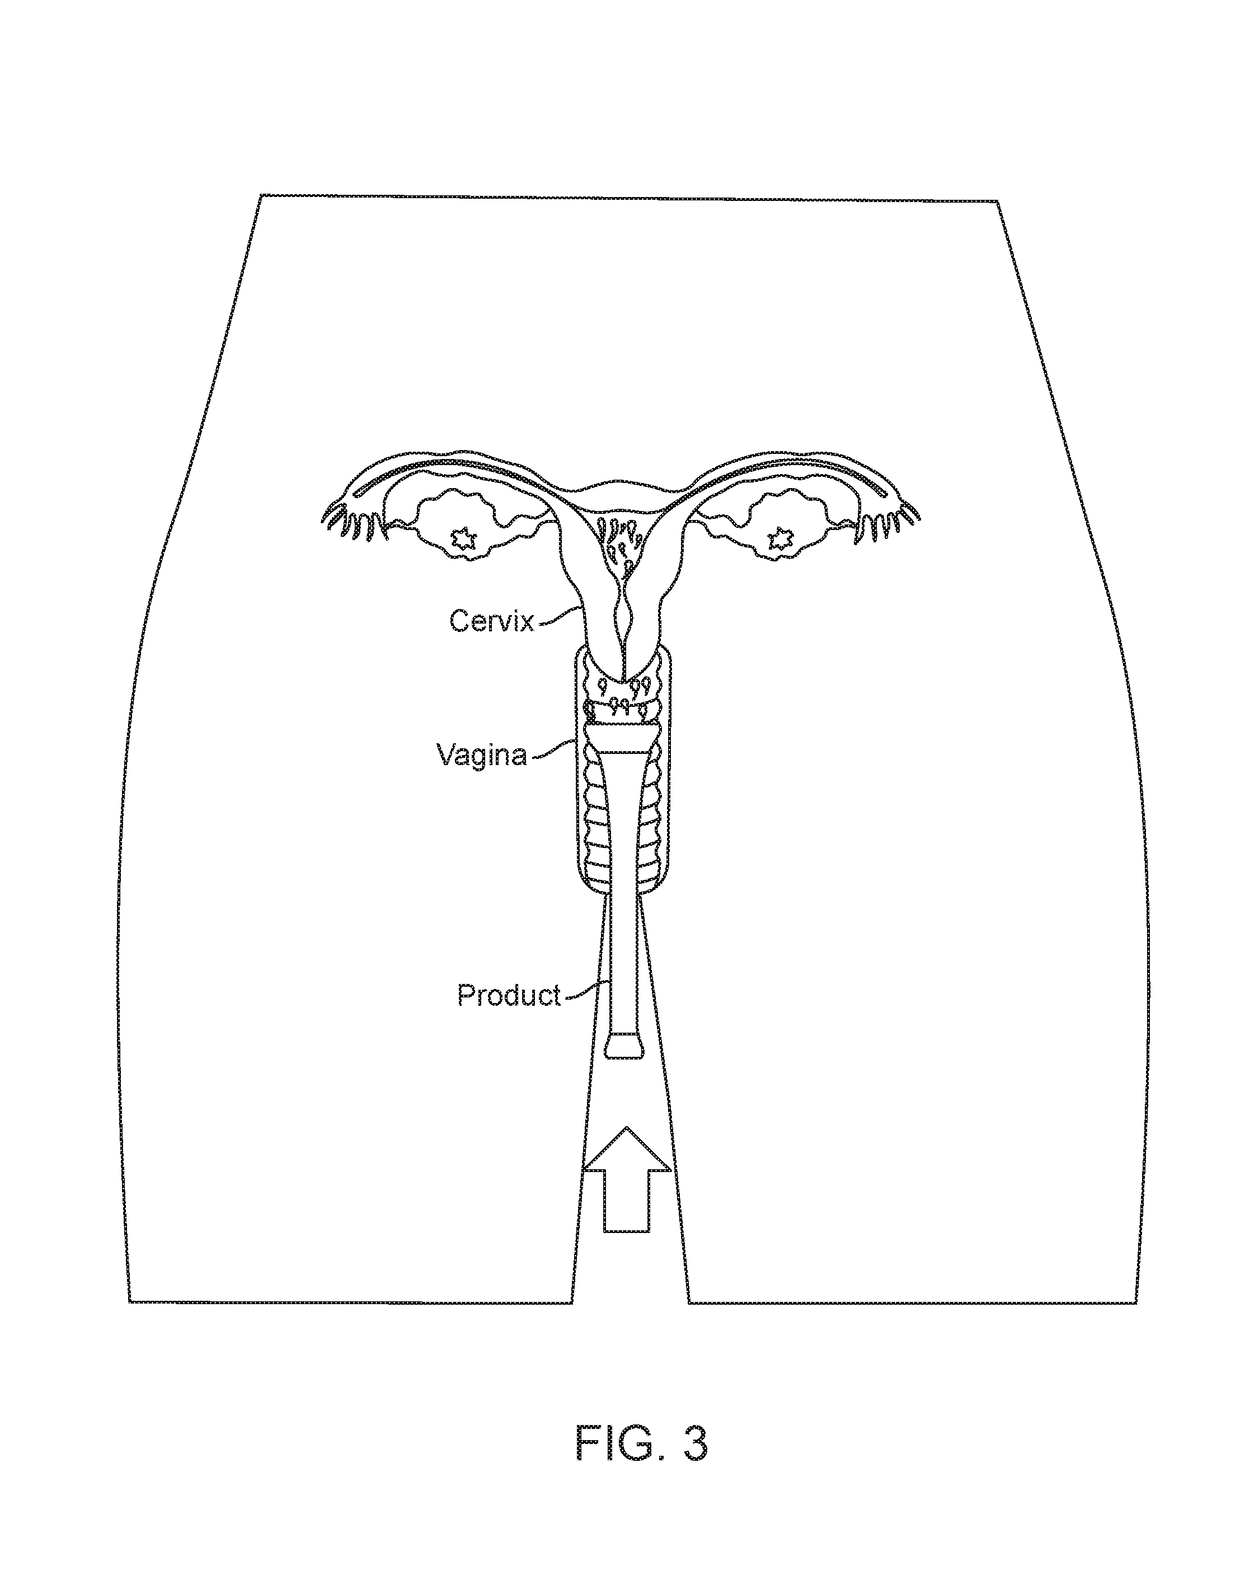 Intravaginal fertility device